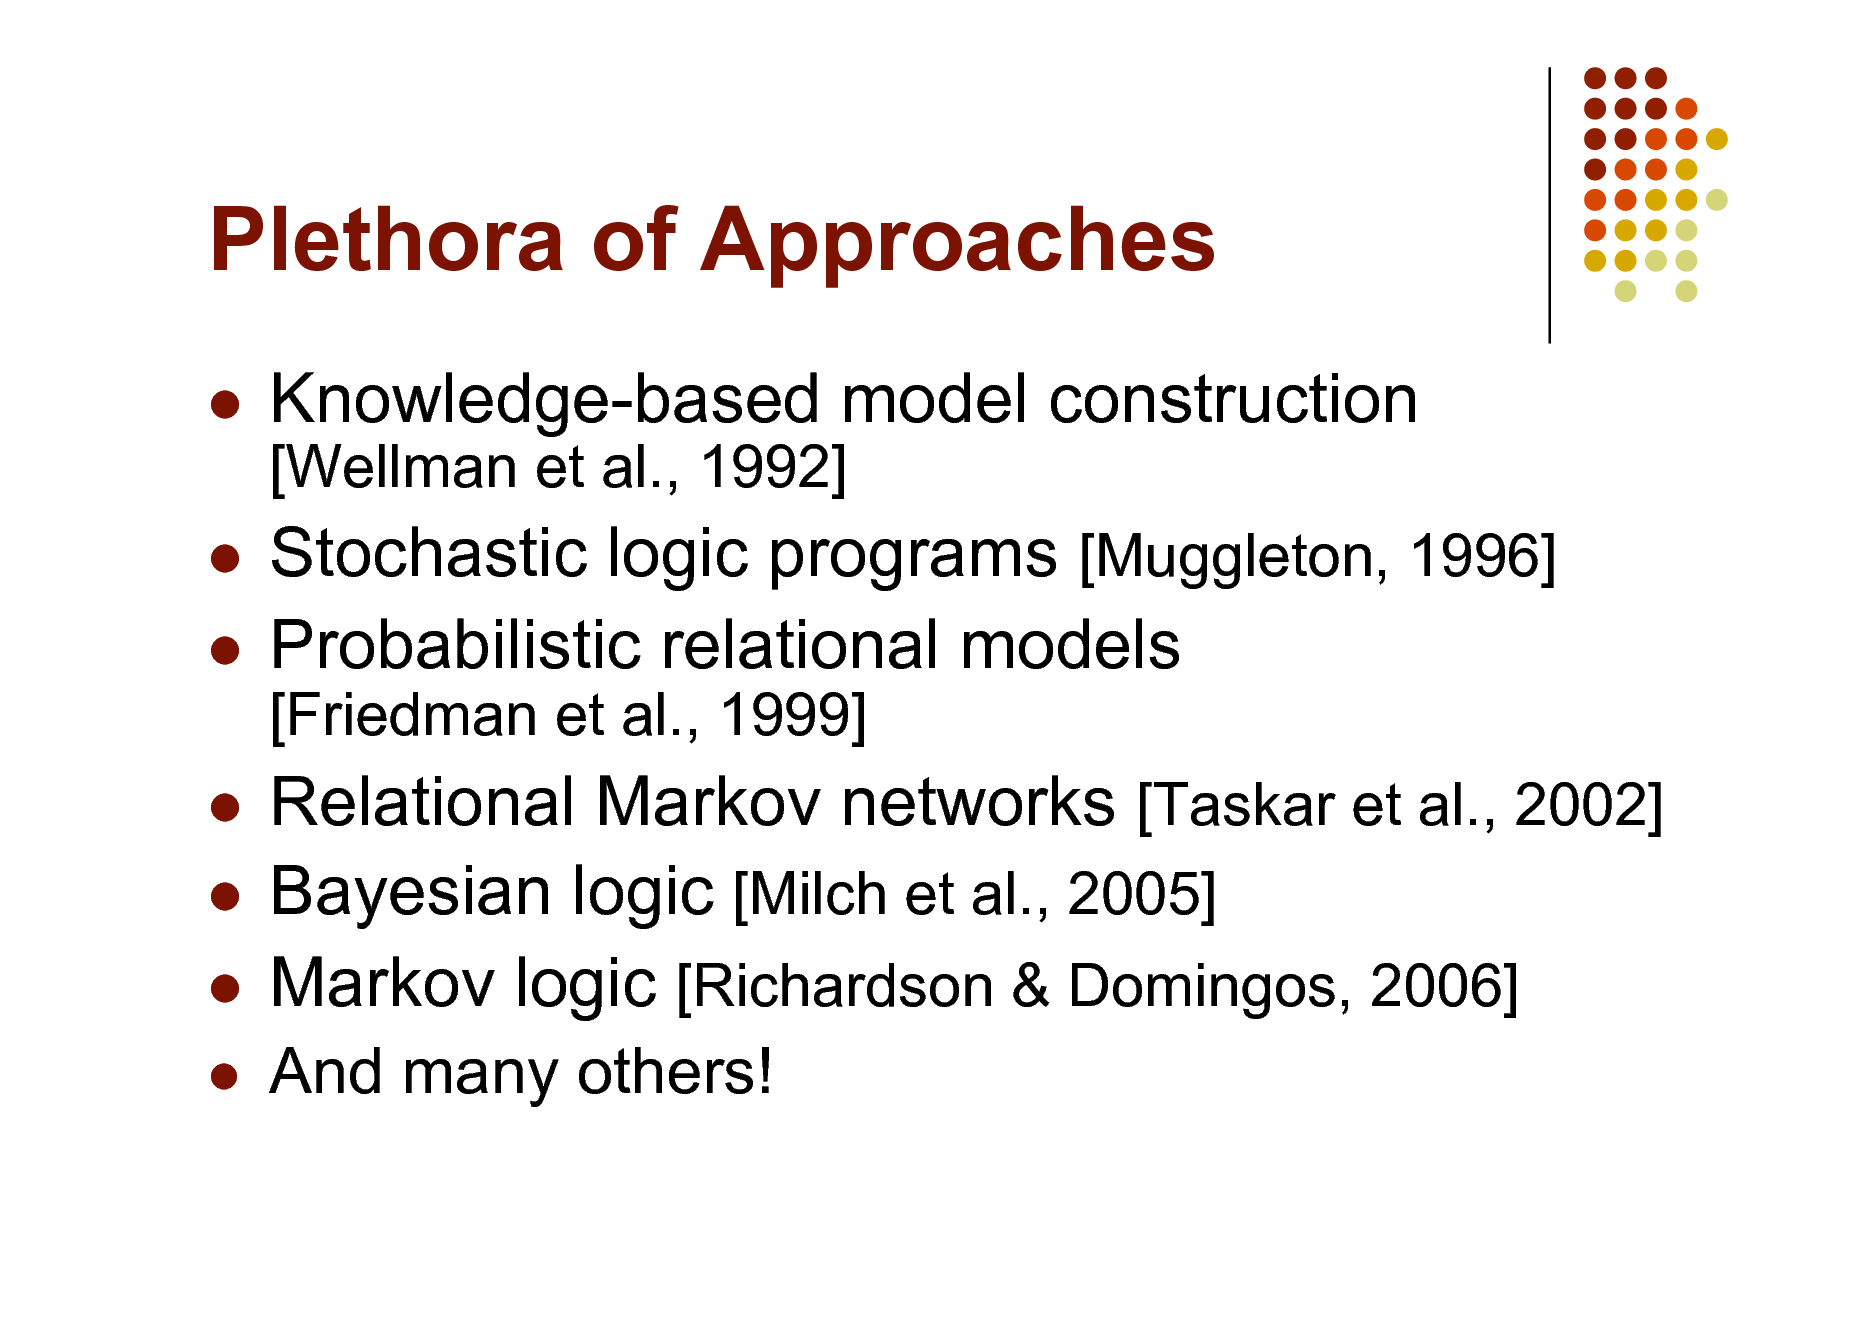 Slide: Plethora of Approaches
 

Knowledge-based model construction
[Wellman et al., 1992]

Stochastic logic programs [Muggleton, 1996]  Probabilistic relational models
[Friedman et al., 1999]

Relational Markov networks [Taskar et al., 2002]  Bayesian logic [Milch et al., 2005]  Markov logic [Richardson & Domingos, 2006]



And many others!

